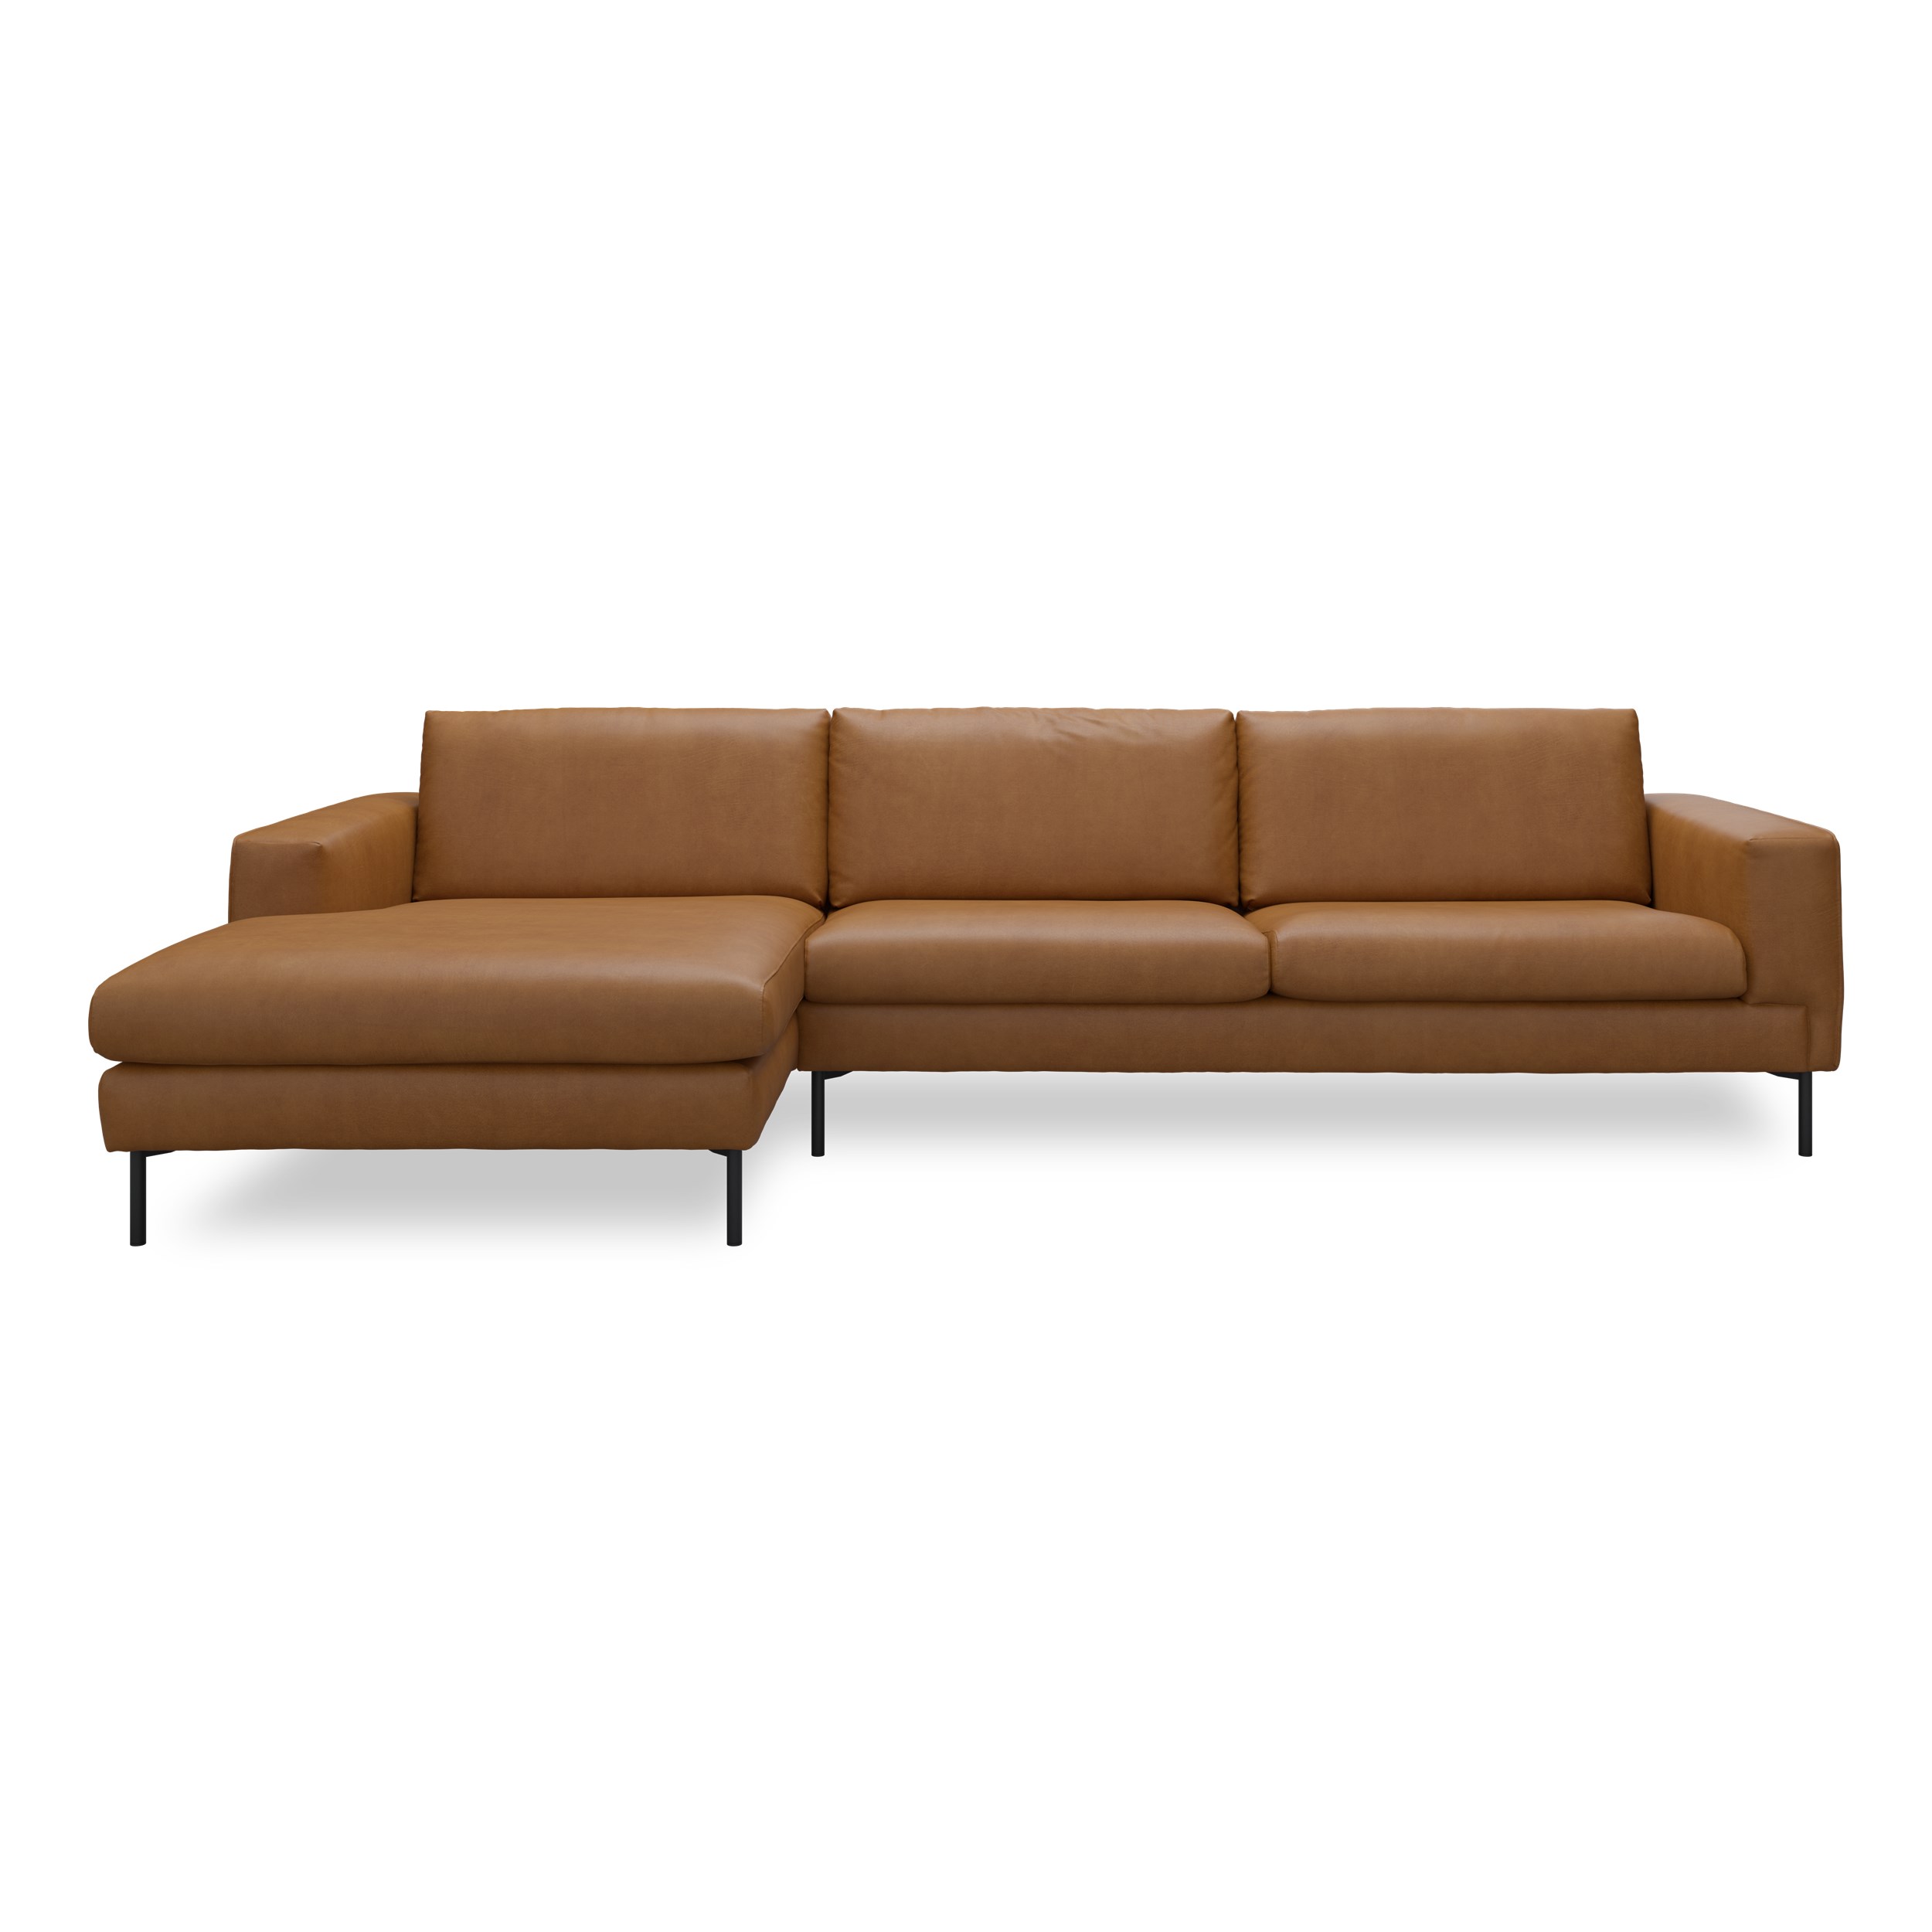 Nyland venstrevendt sofa med chaiselong - Kentucky 9 cognac bonded læder, Ben no. 145 i sortlakeret metal og S: Pocketfjedre/koldskum R: Koldskum med fiberfyld